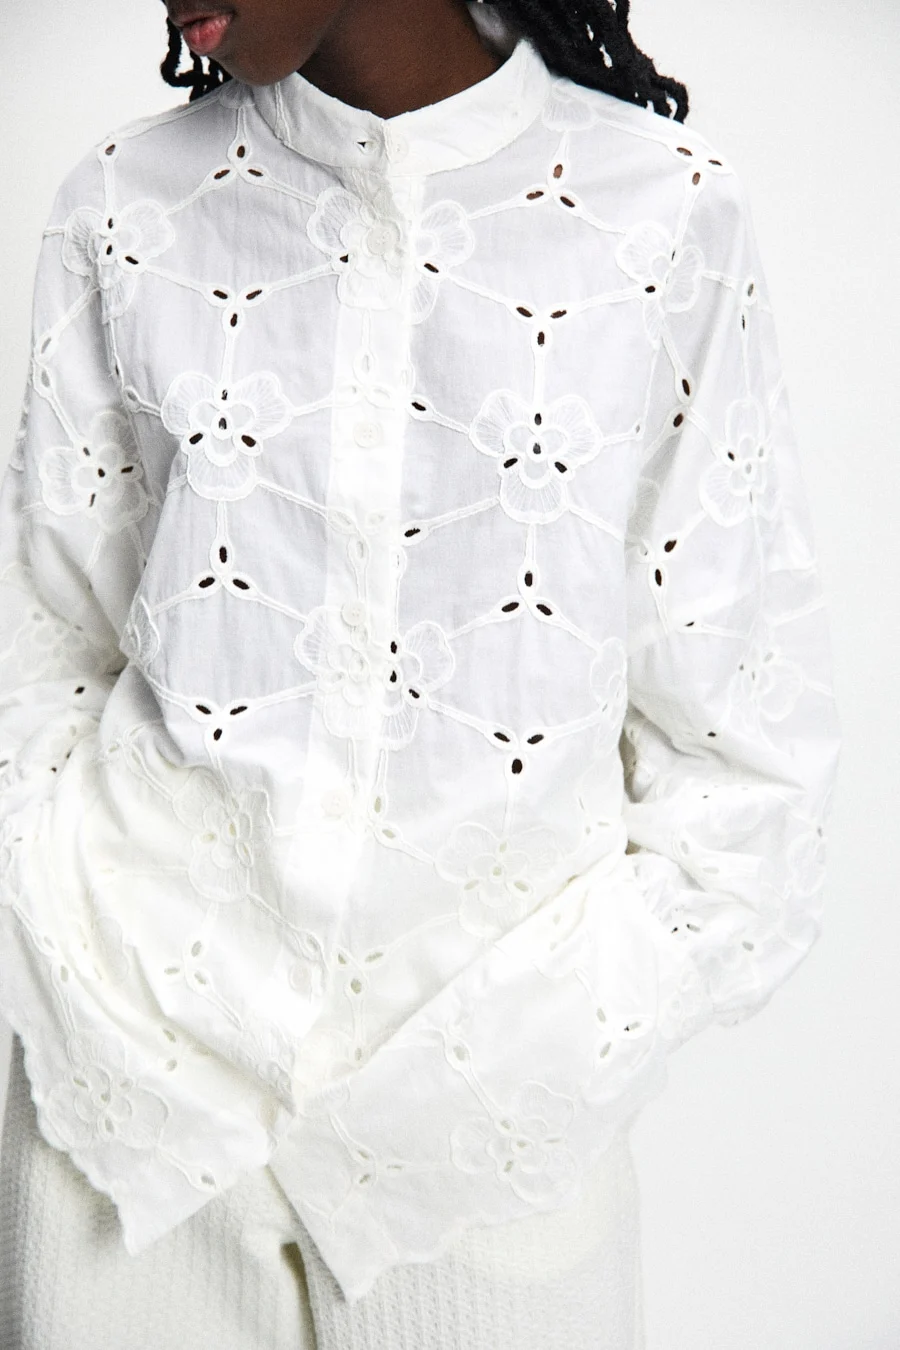 RITA ROW - Vesta Shirt - White 4